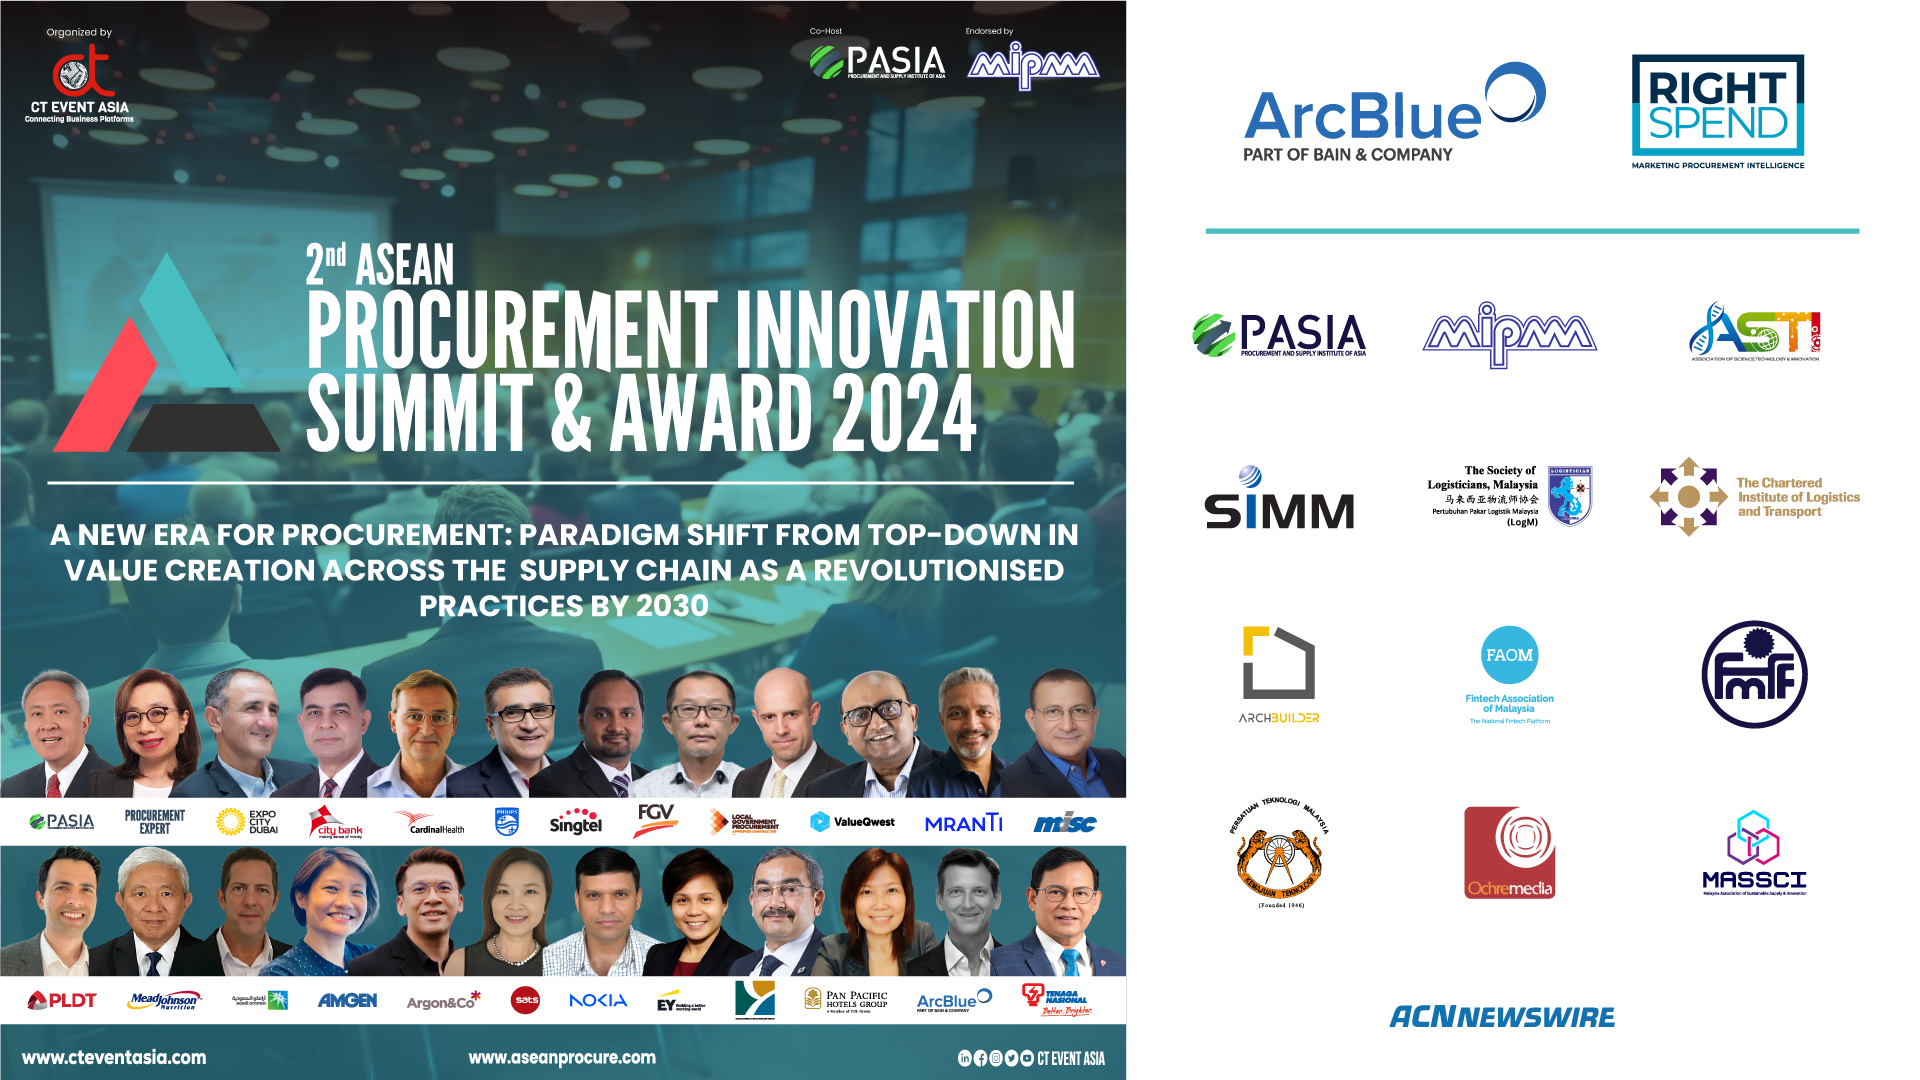 2nd ASEAN Procurement Innovation Summit & Award 2024